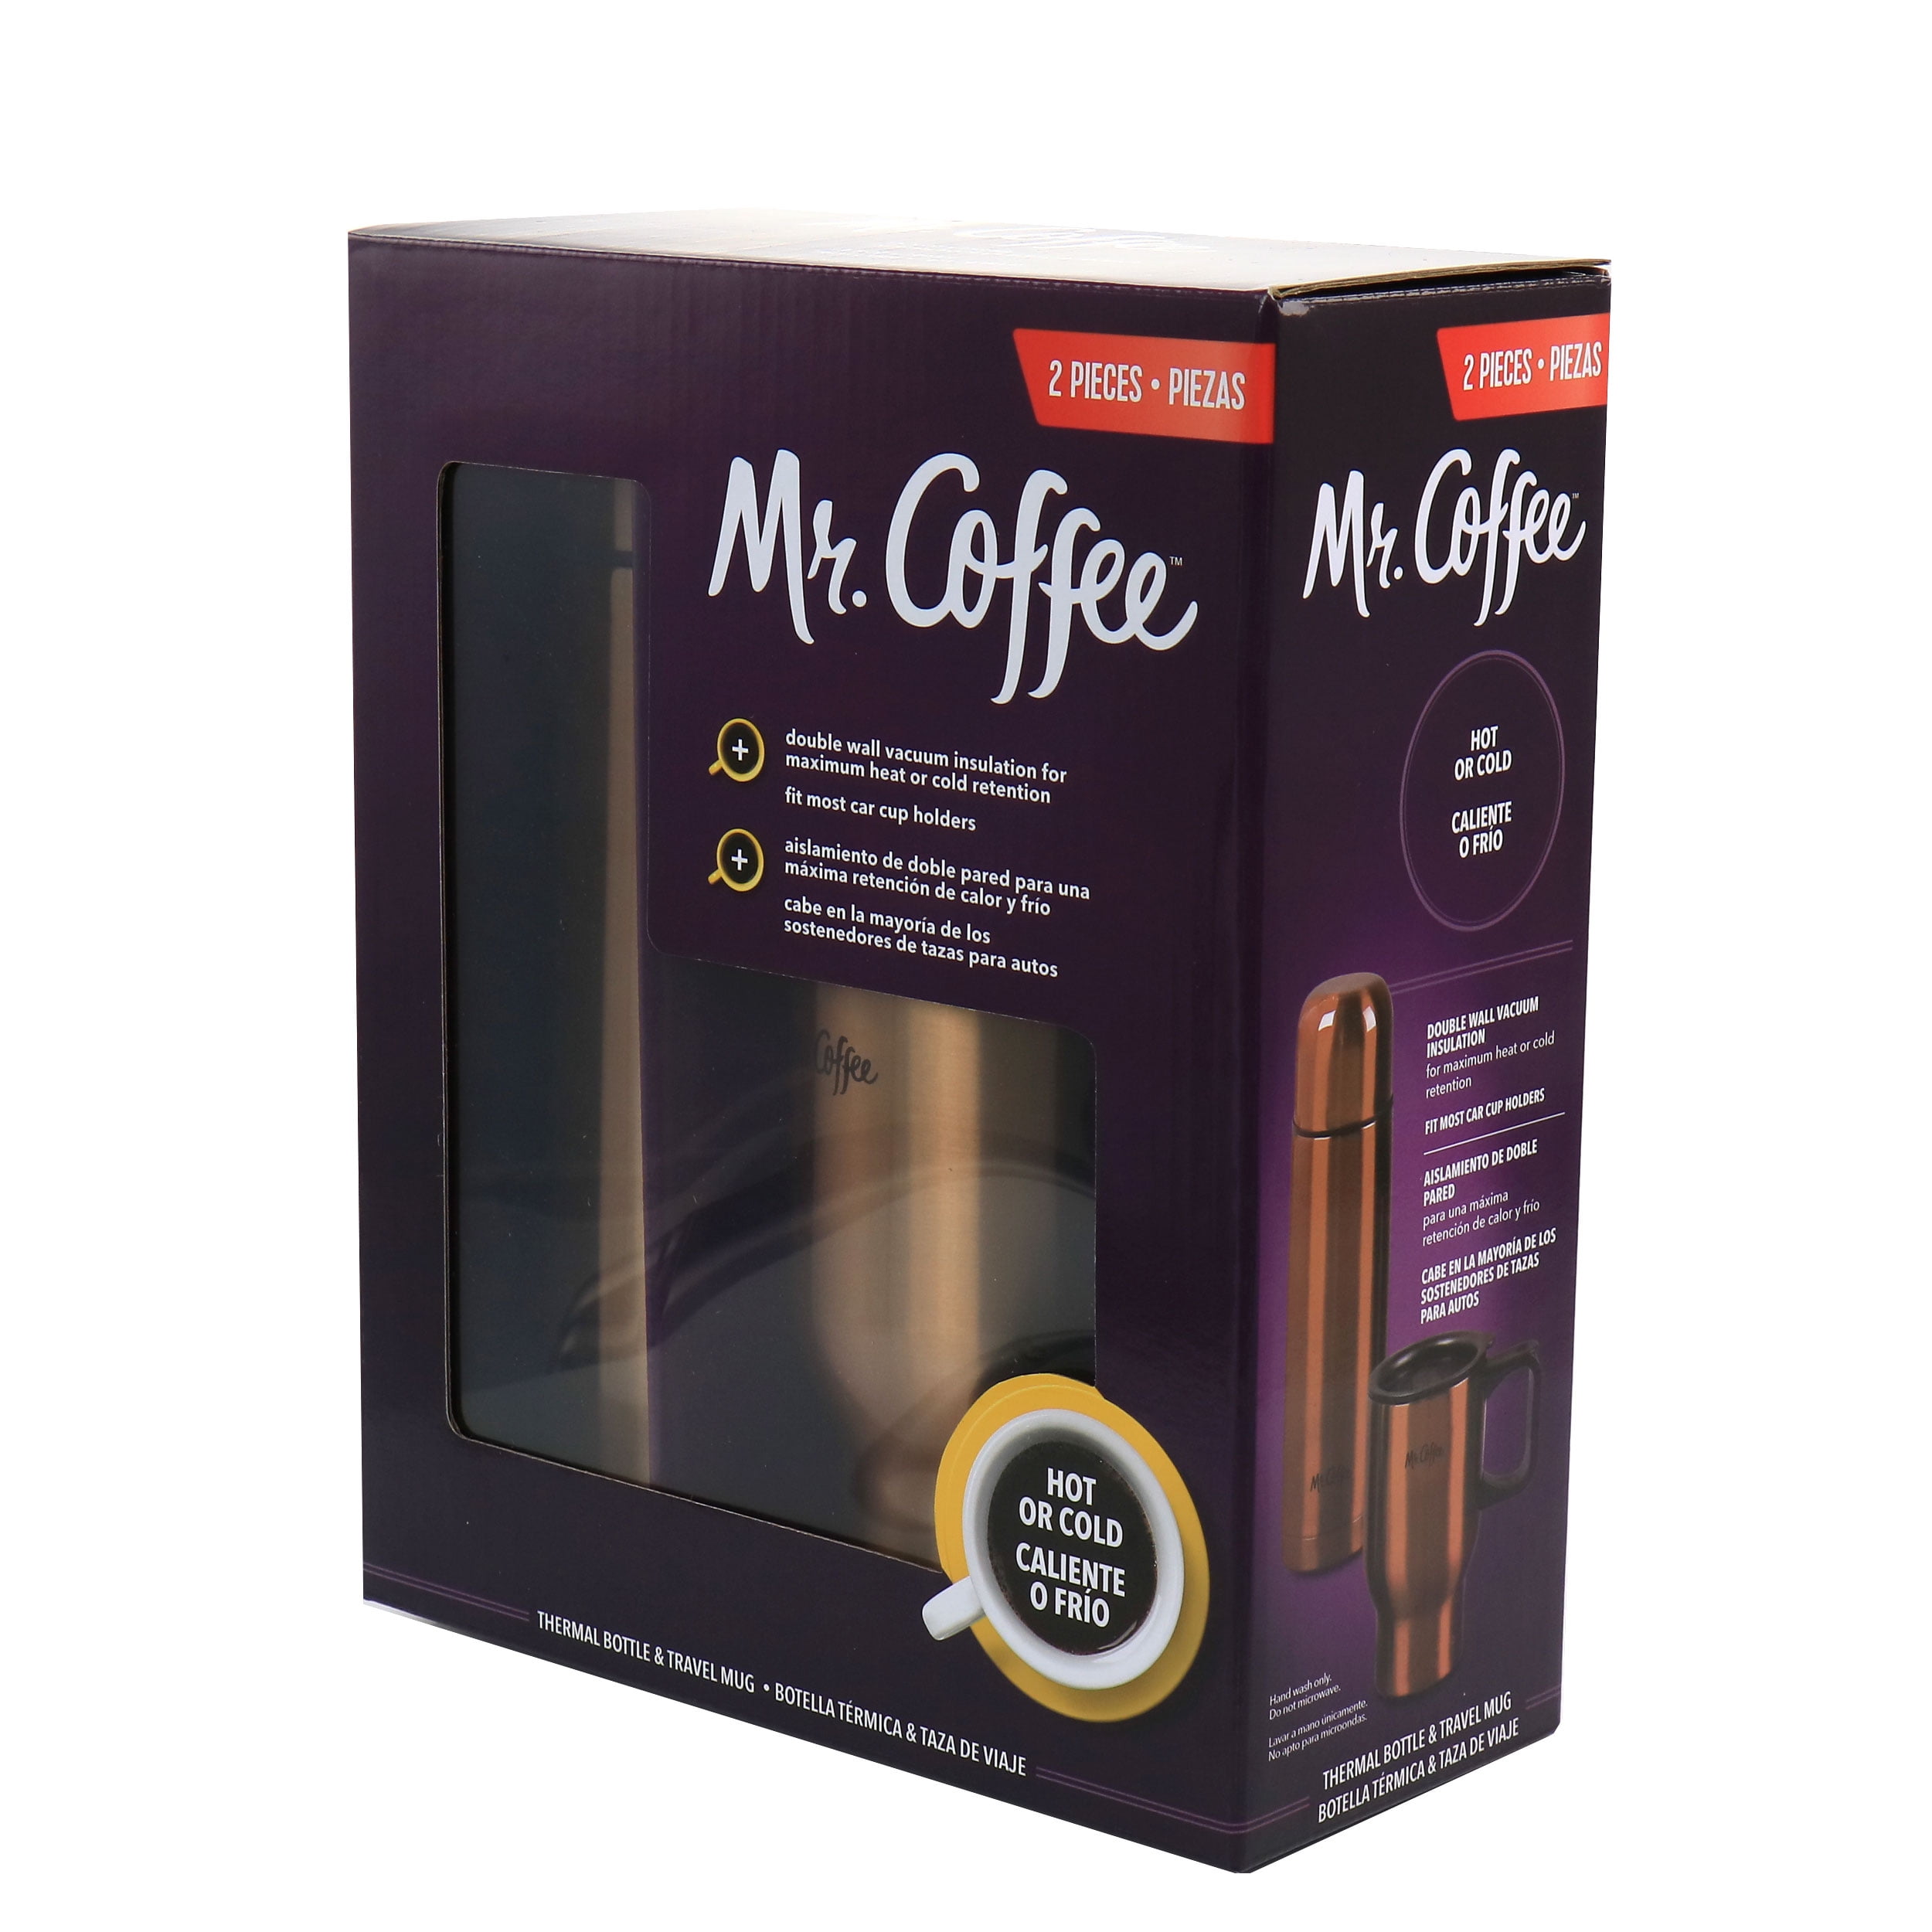 Mr. Coffee Expressway 15-fl oz Stainless Steel Travel Mug in the